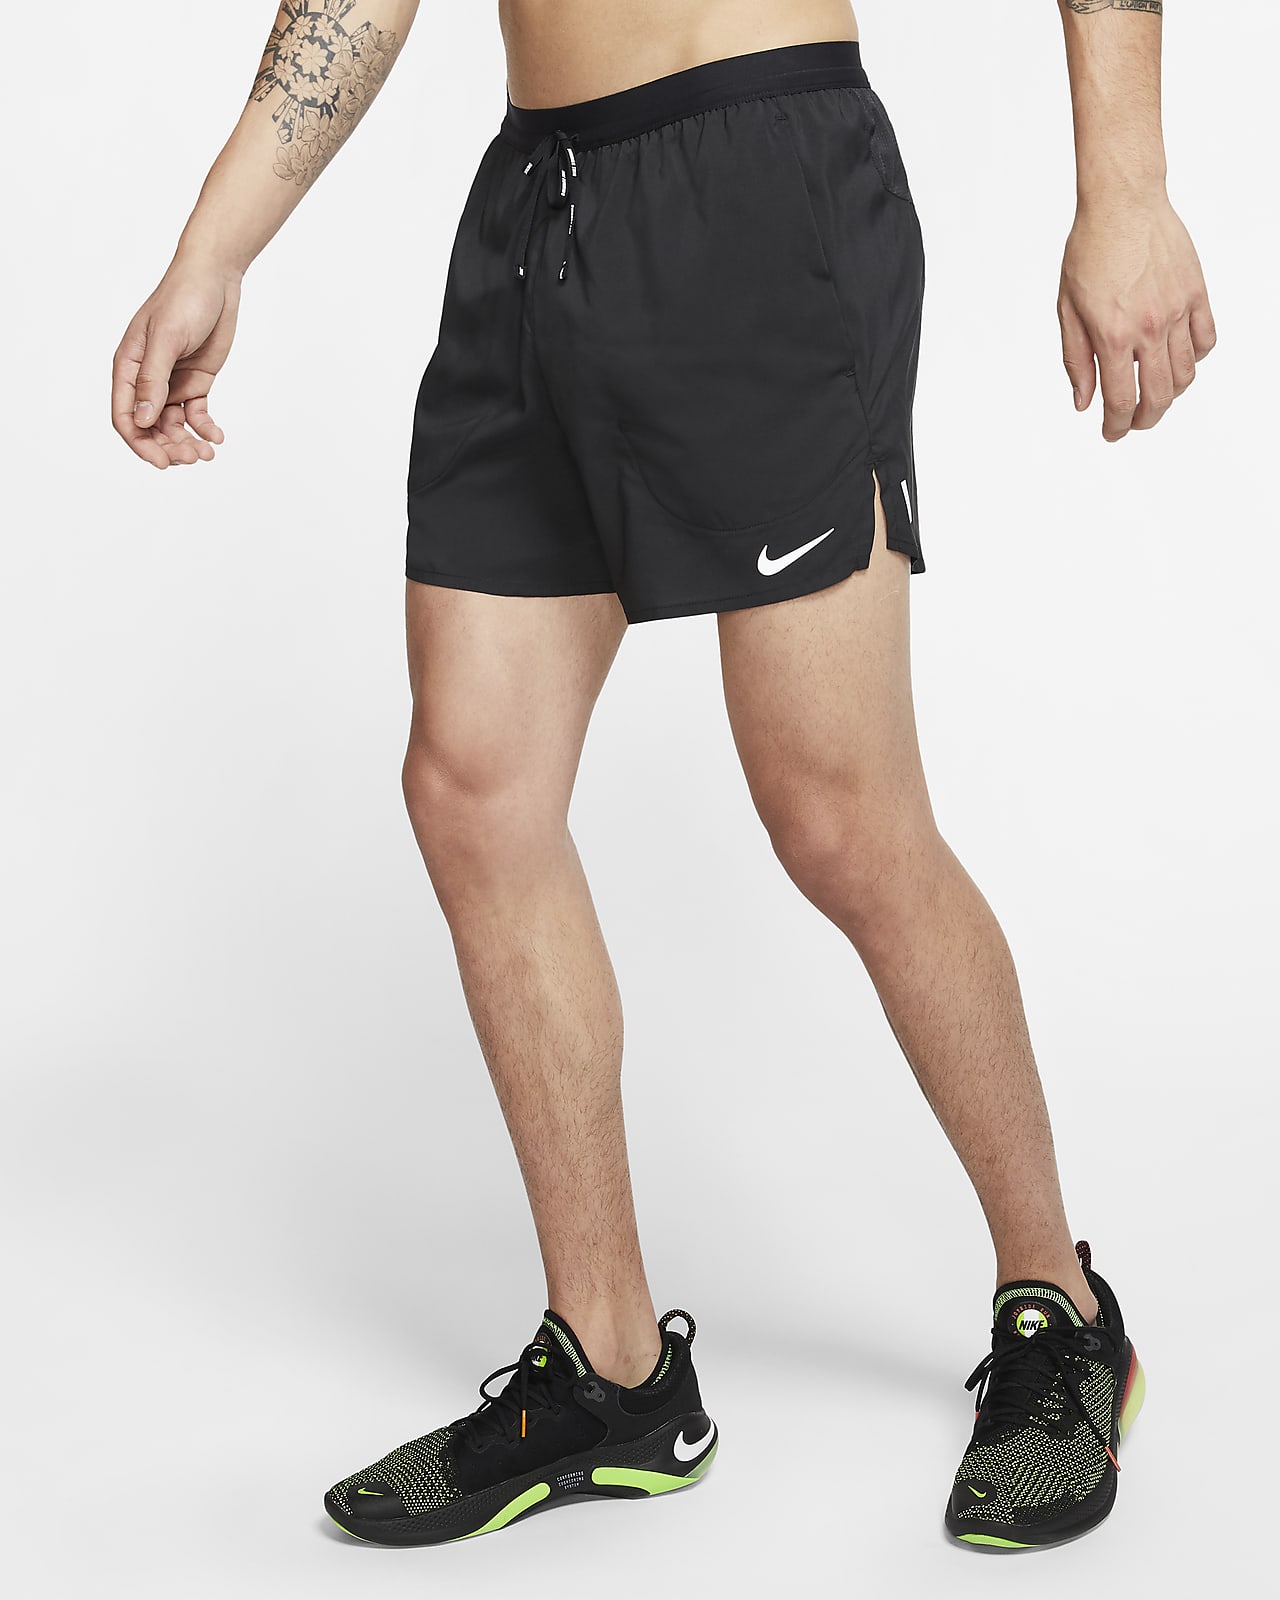 Secretar a nombre de elevación Shorts de running con ropa interior de 13 cm para hombre Nike Flex Stride.  Nike.com